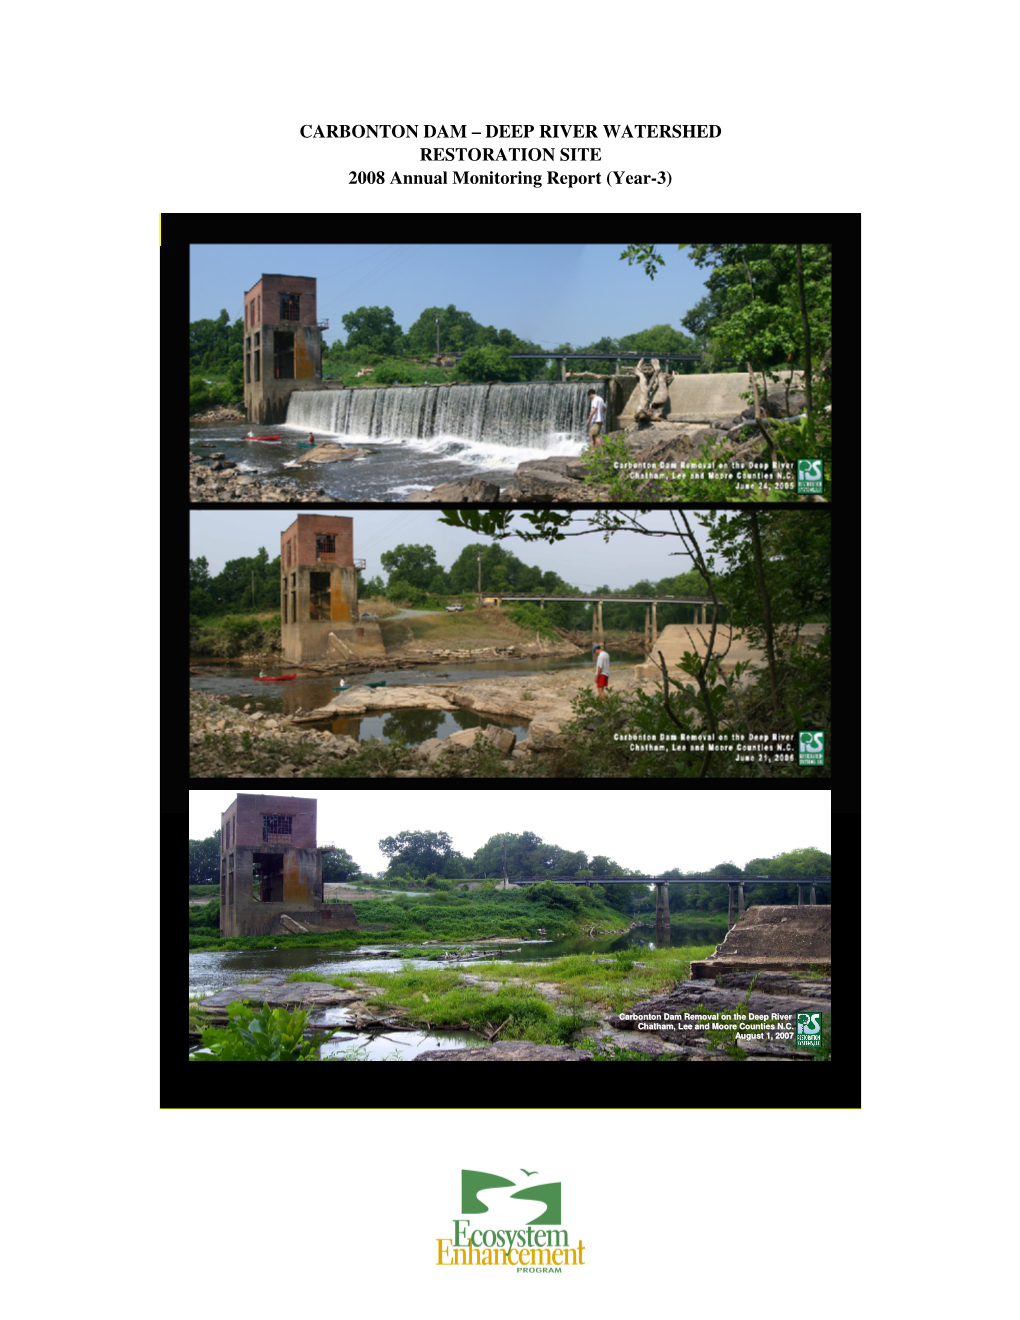 CARBONTON DAM – DEEP RIVER WATERSHED RESTORATION SITE 2008 Annual Monitoring Report (Year-3)